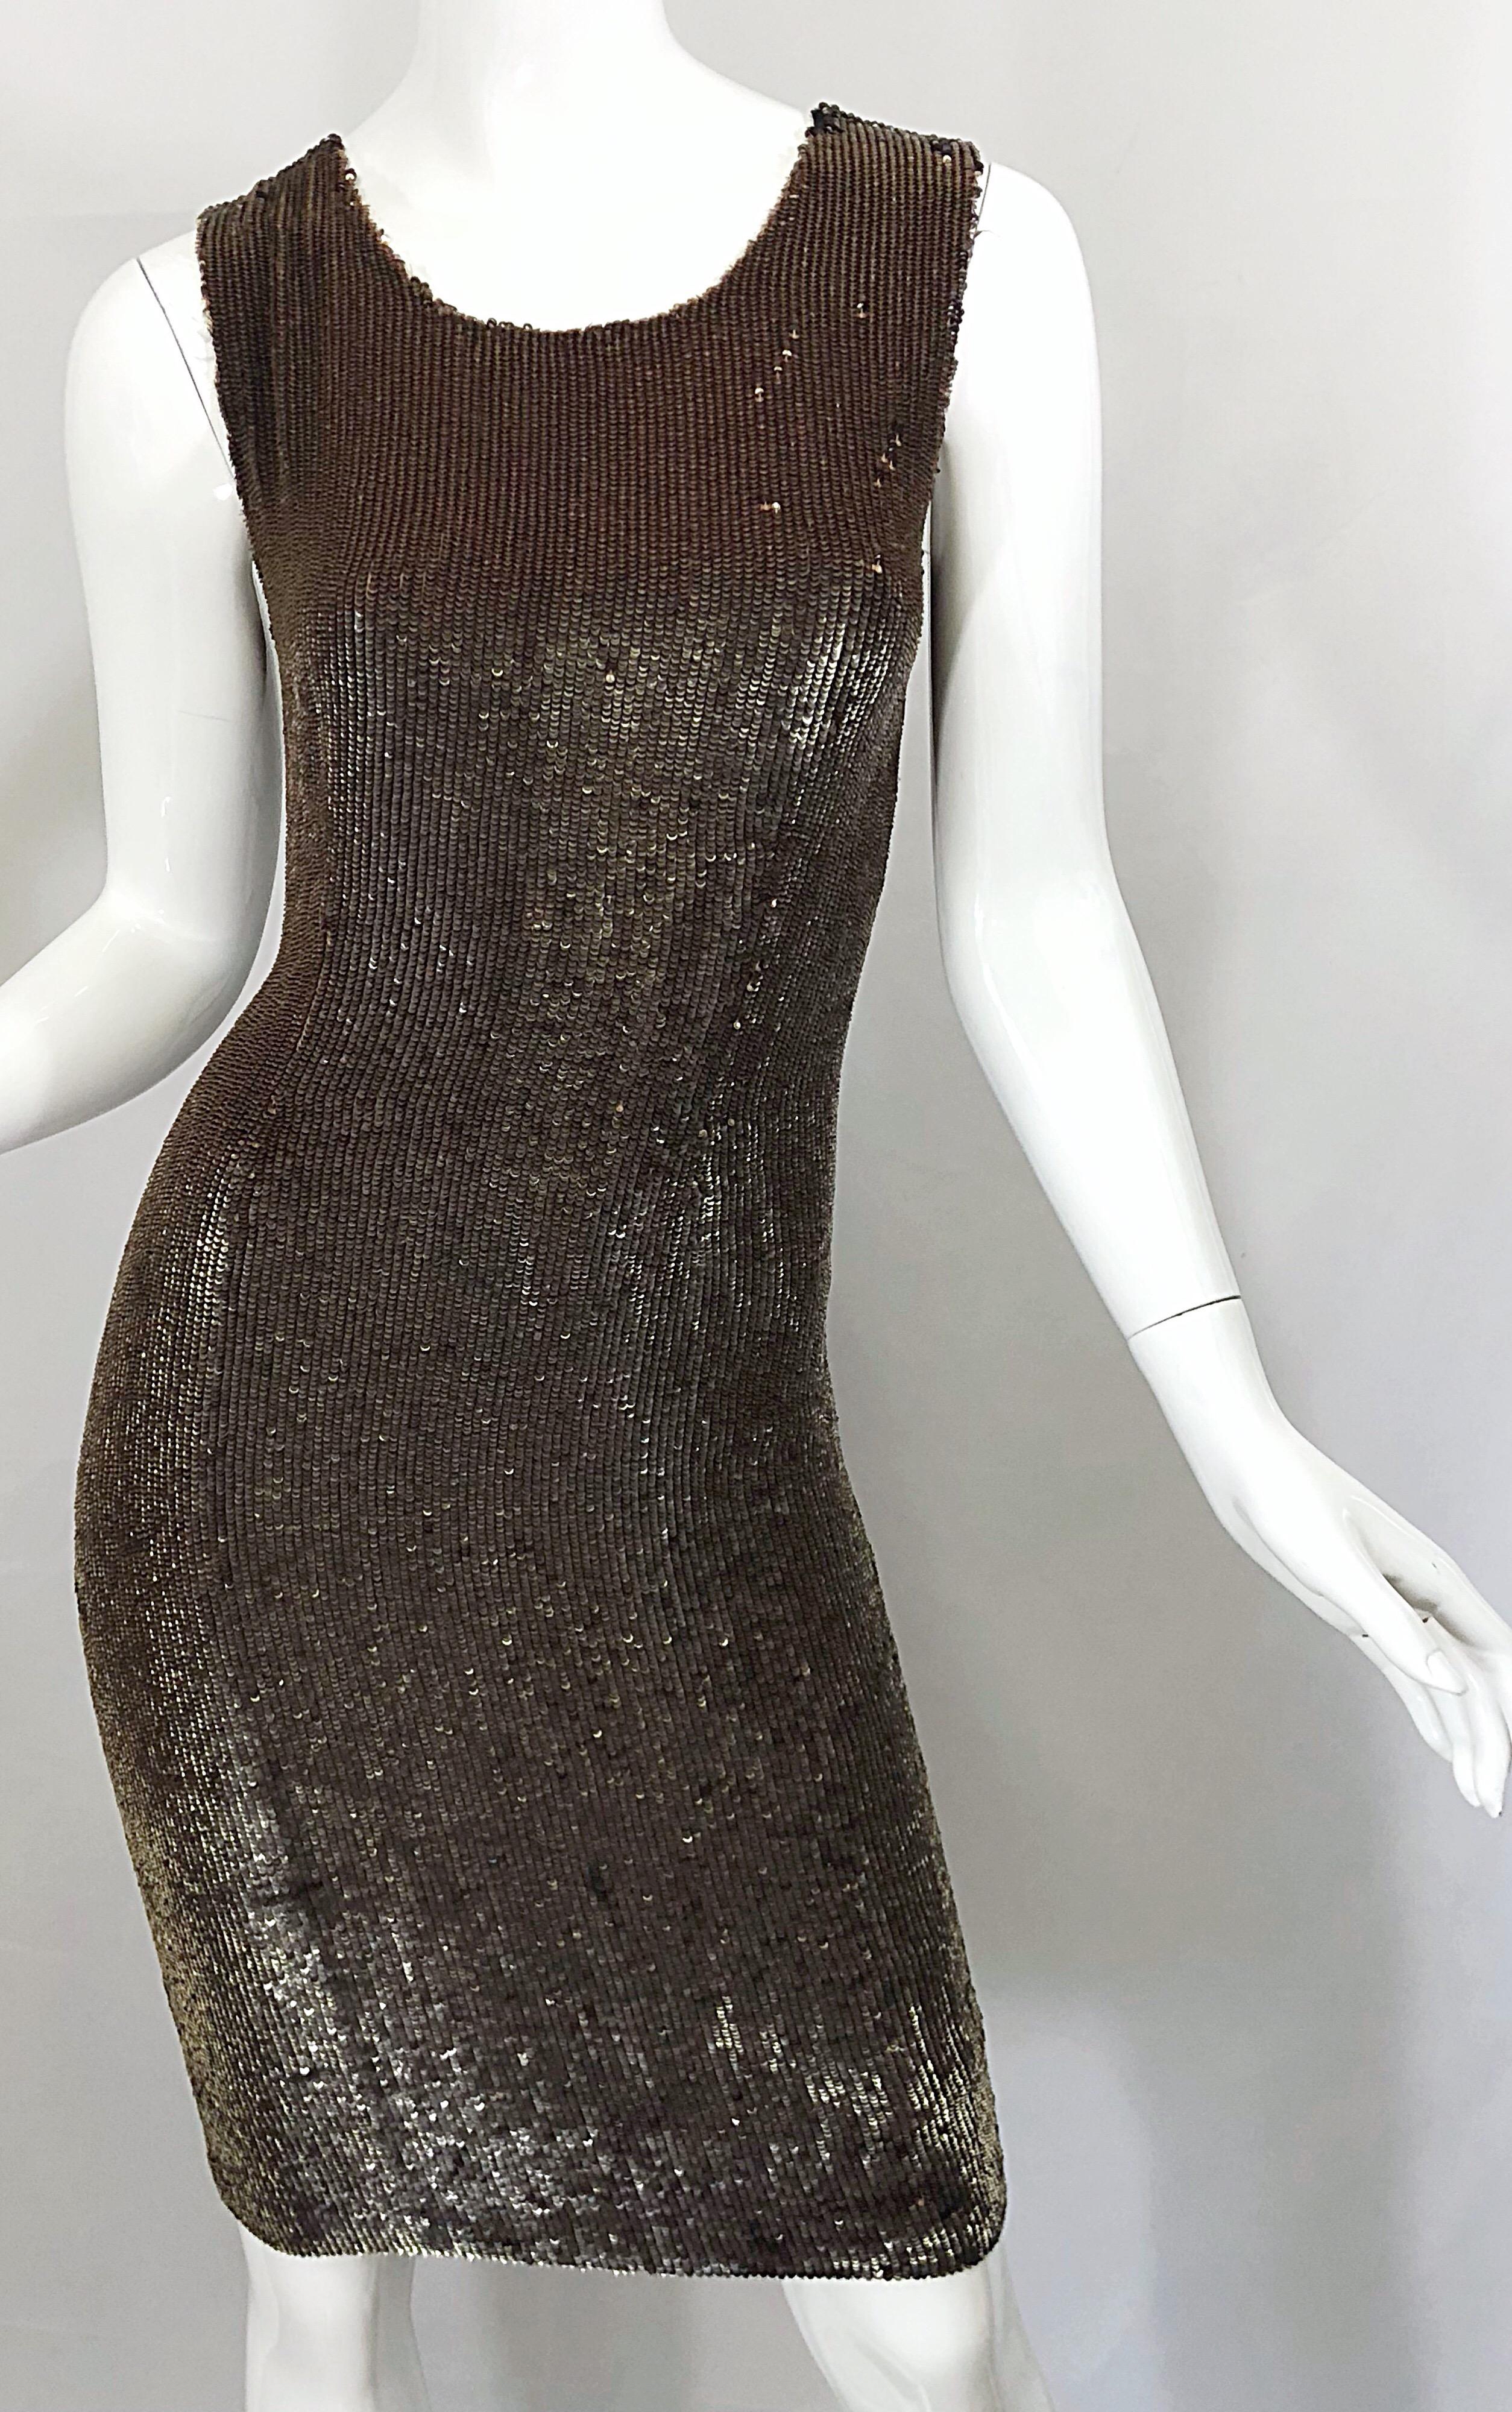 Bill Blass Early 2000s Silk Chiffon Brown Bronze Fully Sequined Sheath Dress For Sale 4